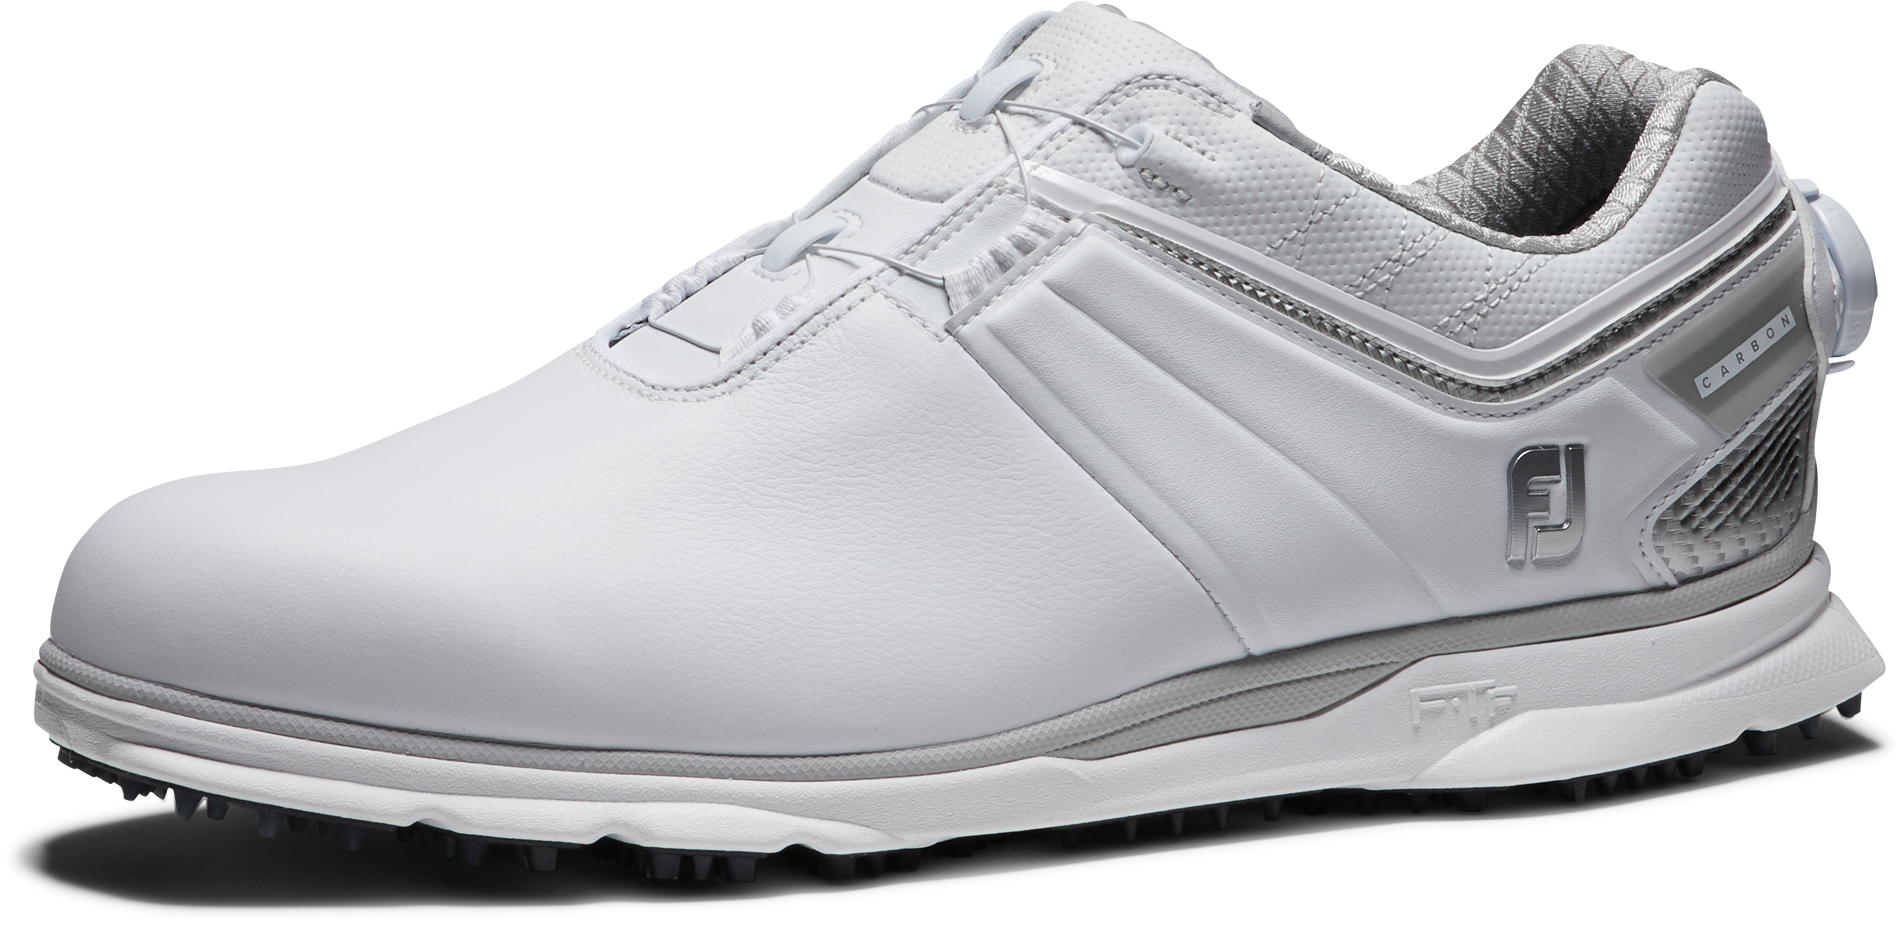 FootJoy Pro/SL Carbon BOA Golfschuh, M, white/silver